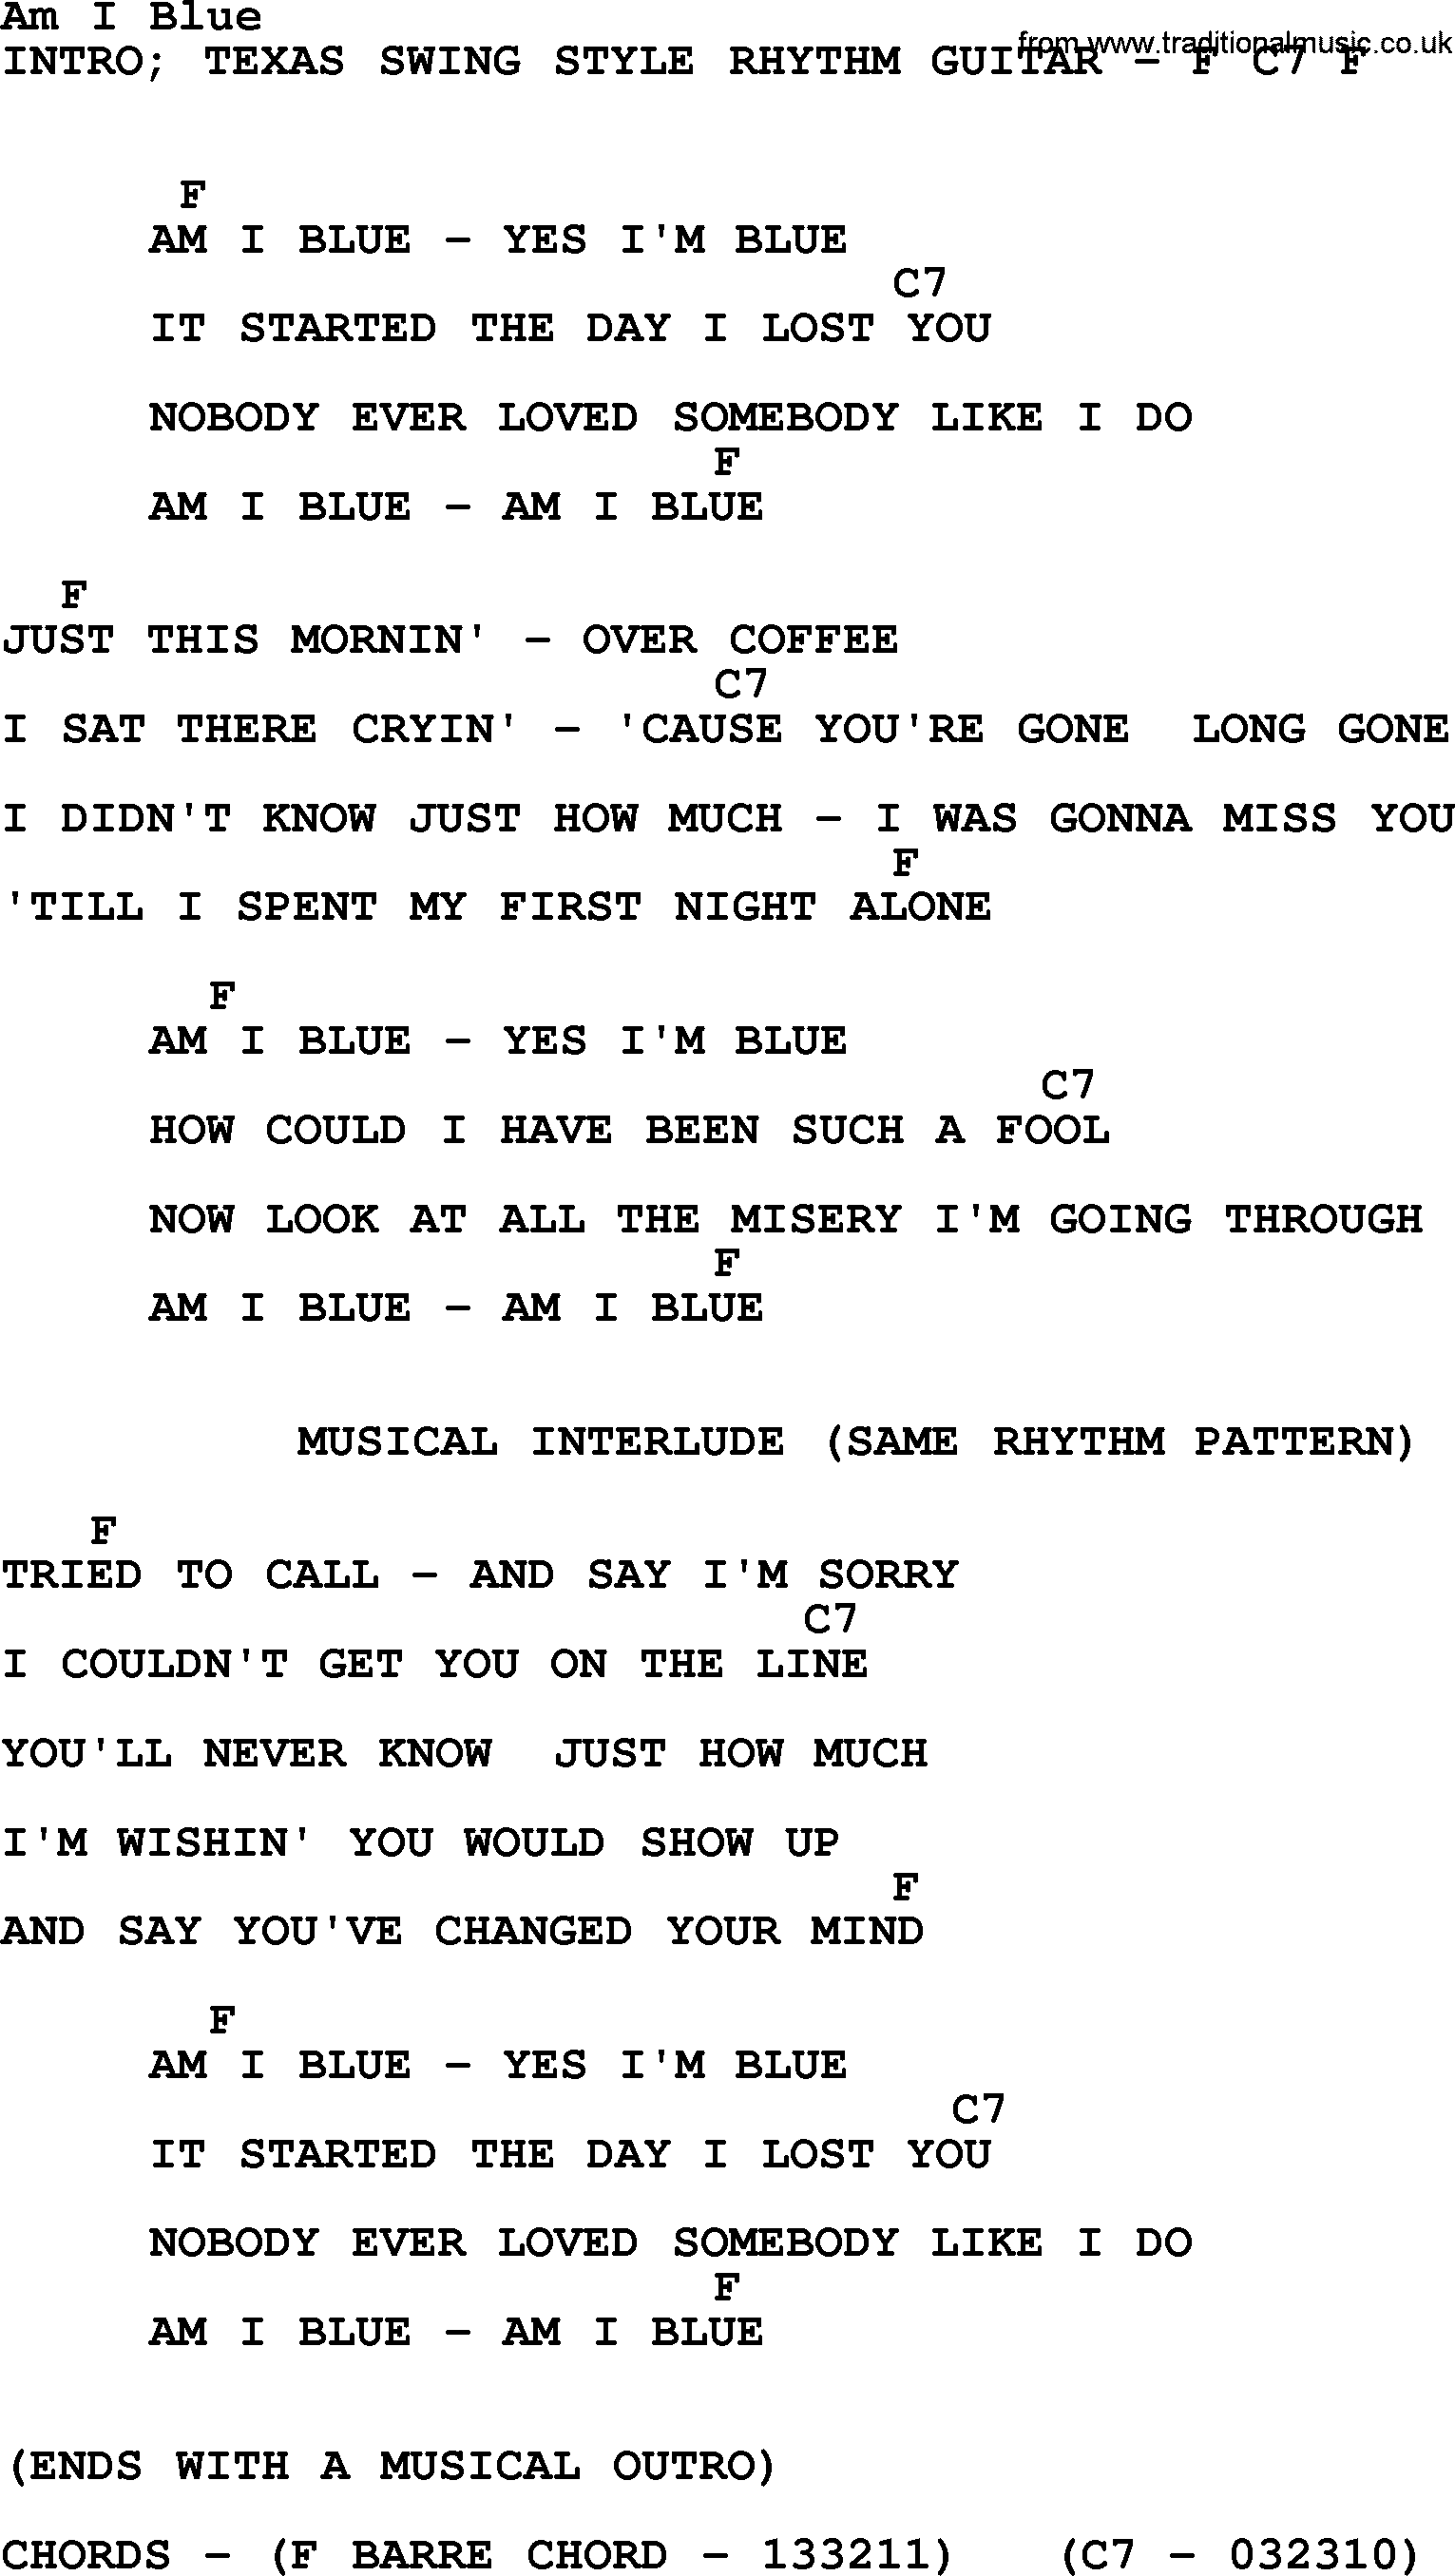 George Strait song: Am I Blue, lyrics and chords